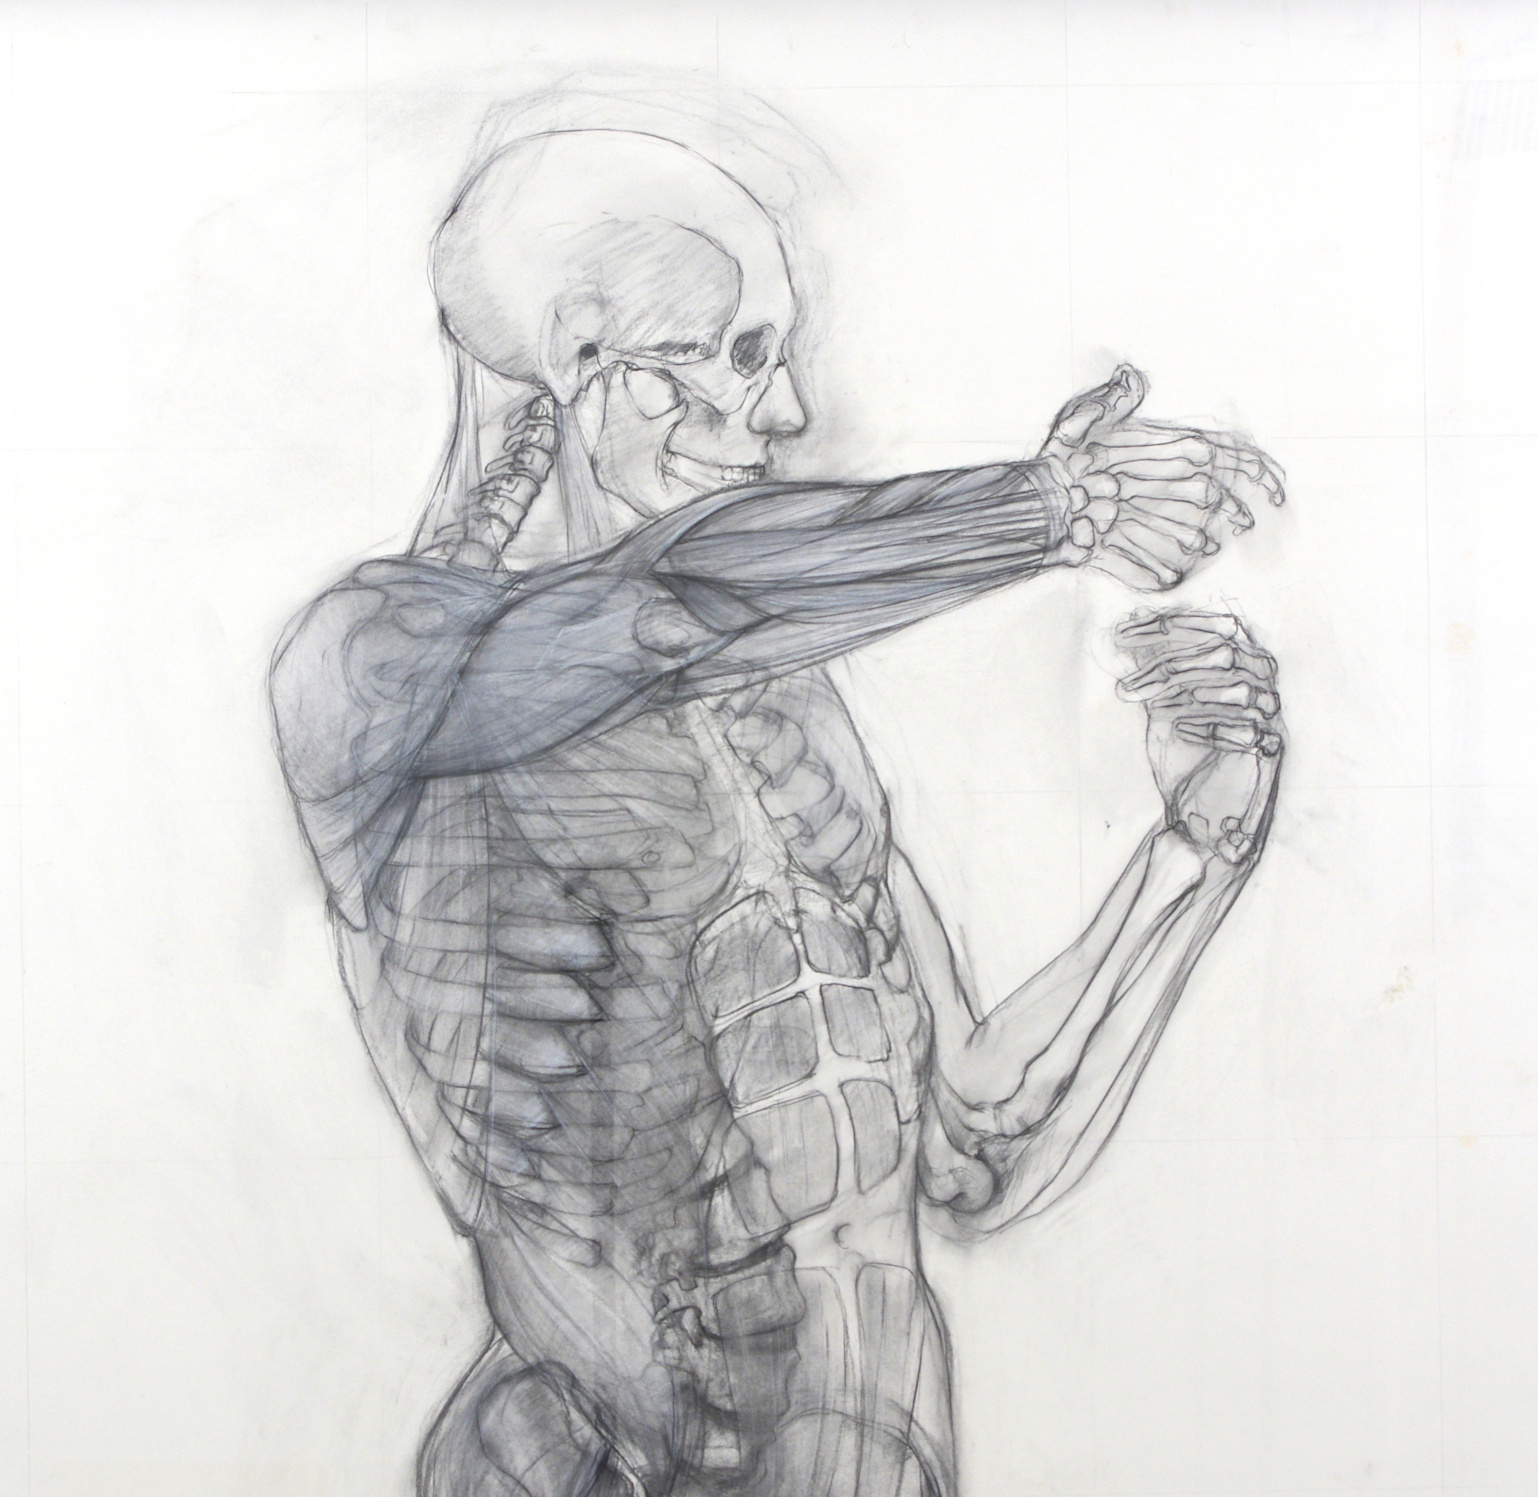 Jaye Gregory (1951- 2016) Pair of Life Sized Anatomical Studies